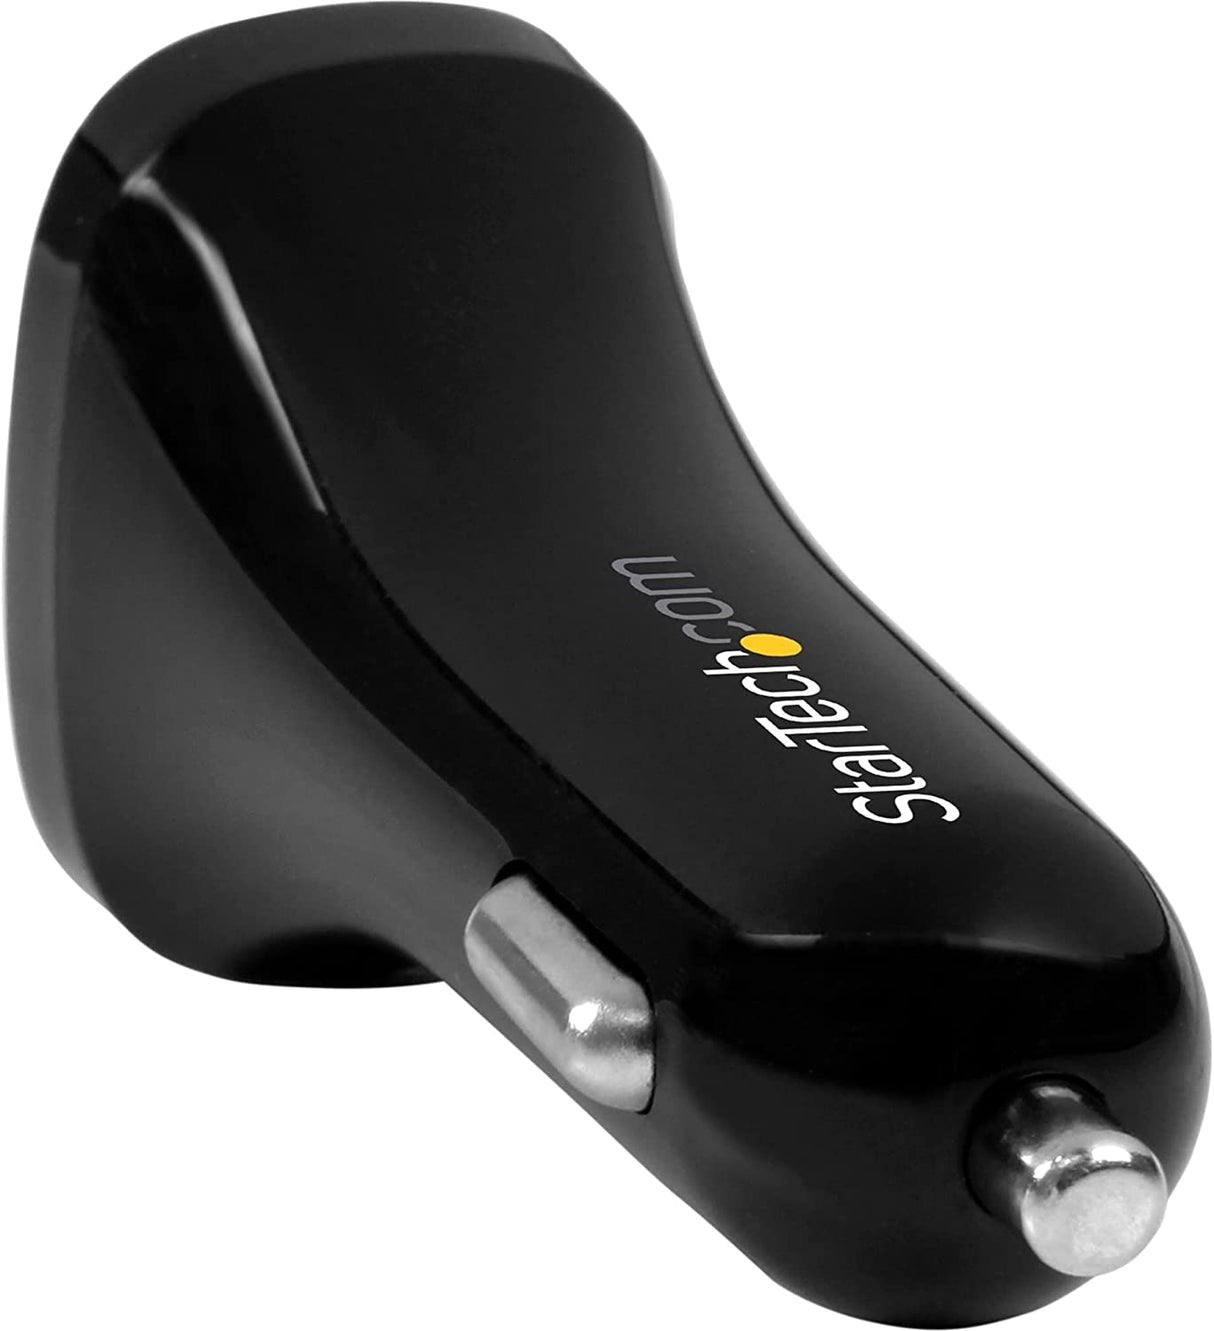 StarTech.com Dual Port USB Car Charger - High Power 24W/4.8A - Black - 2-Port USB Car Charger - Charge Two Tablets at Once (USB2PCARBKS)